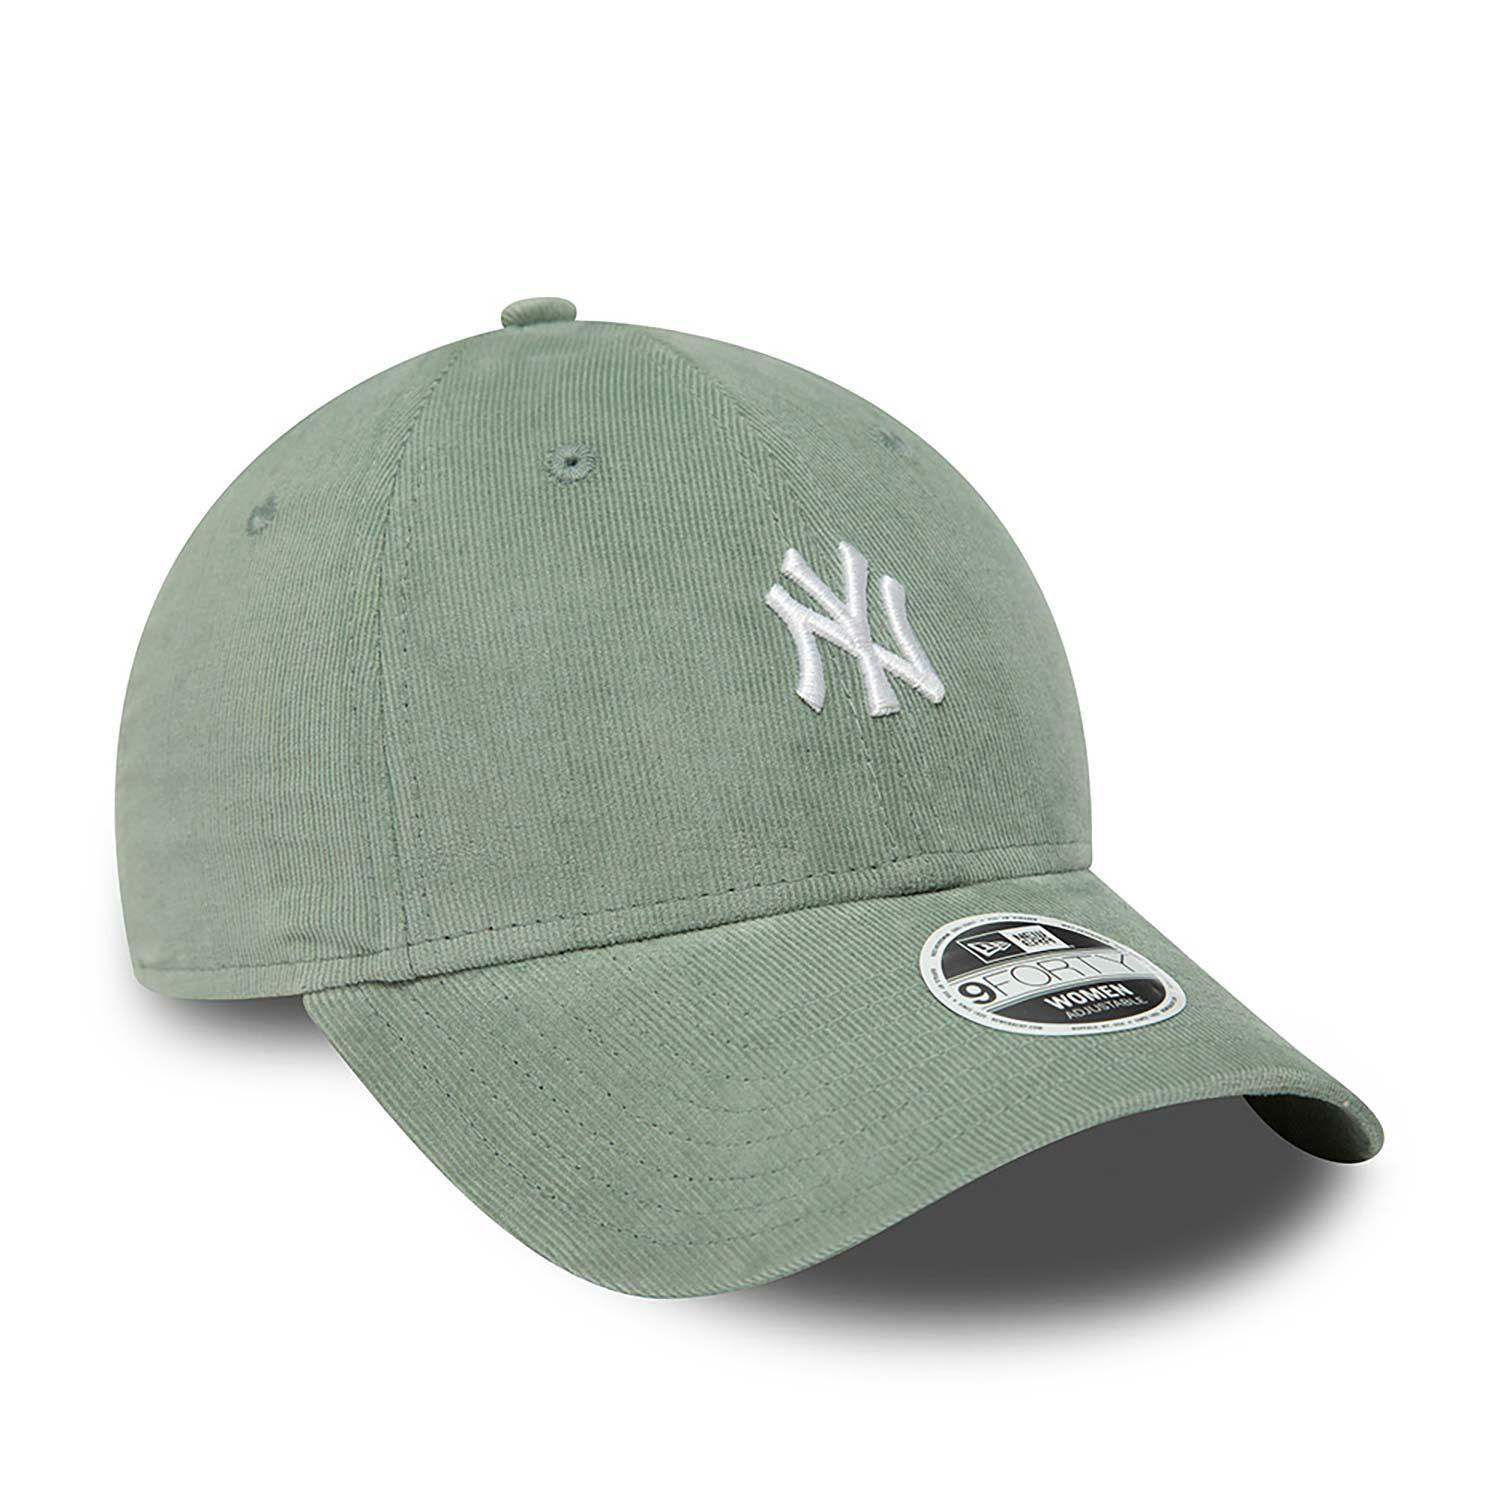 NEW ERA 9FORTY WOMEN MLB NEW YORK YANKEES JERSEY BLACK CAP – FAM